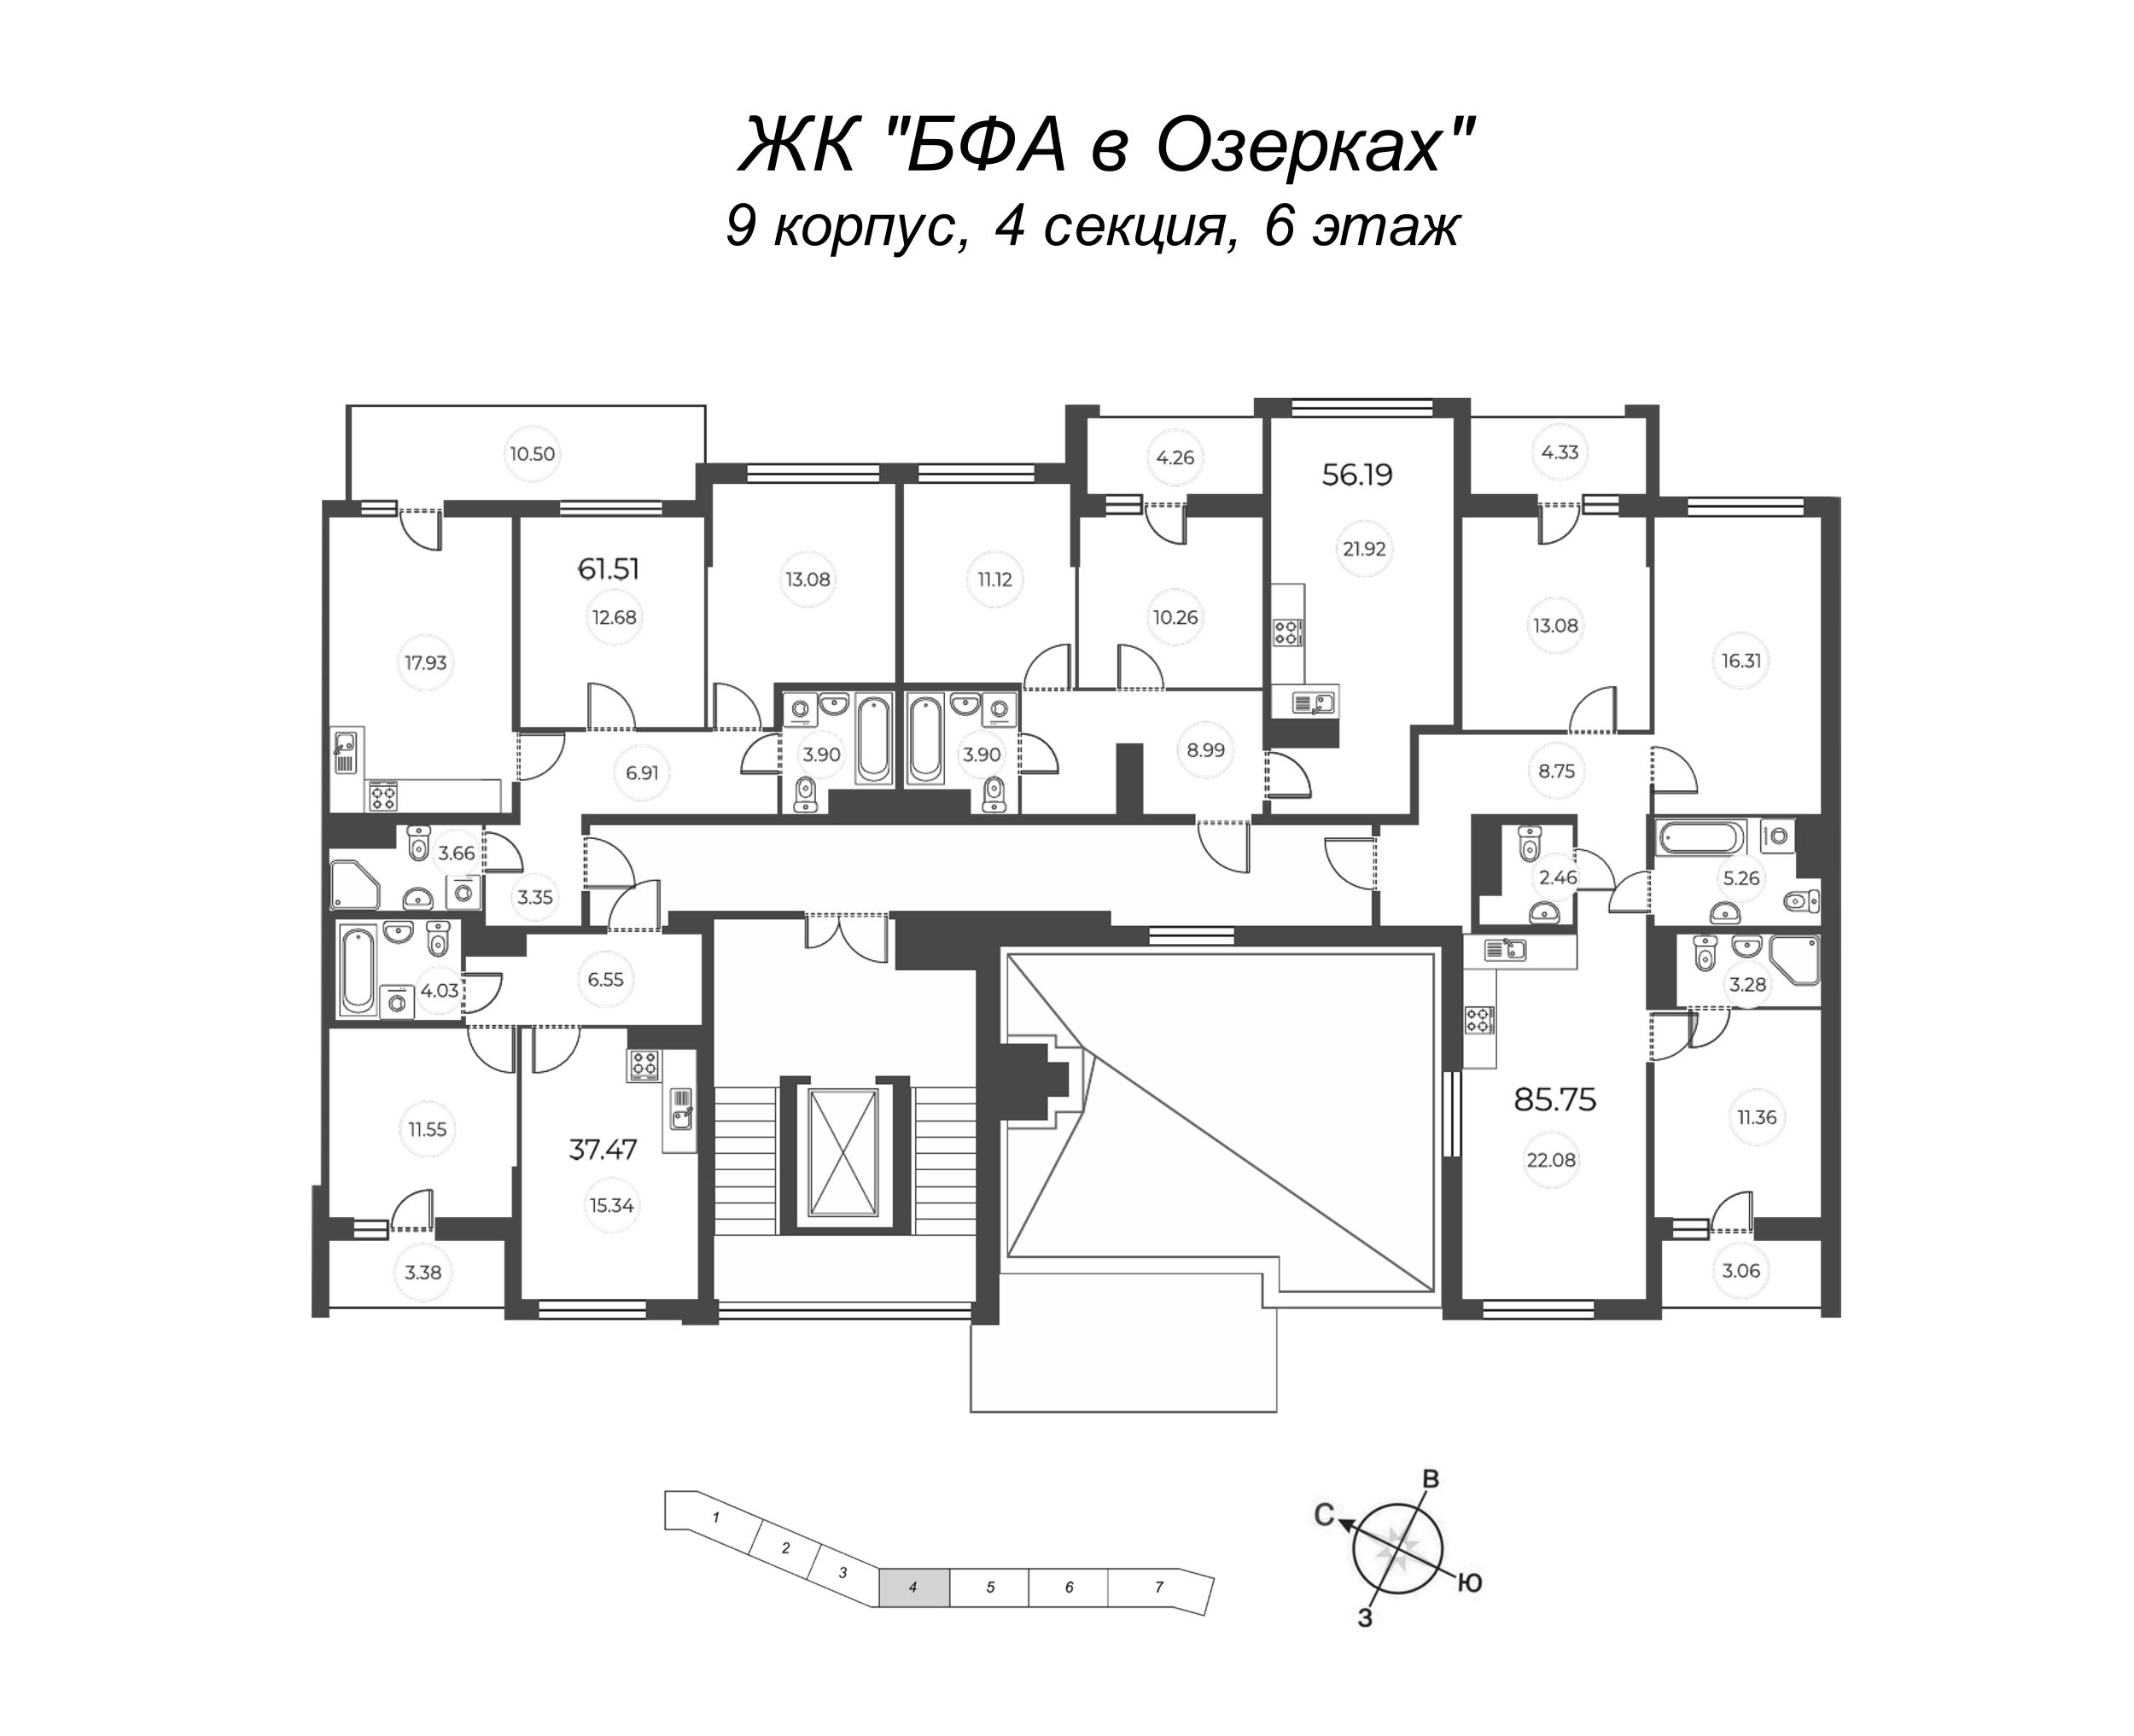 2-комнатная (Евро) квартира, 39.16 м² в ЖК "БФА в Озерках" - планировка этажа